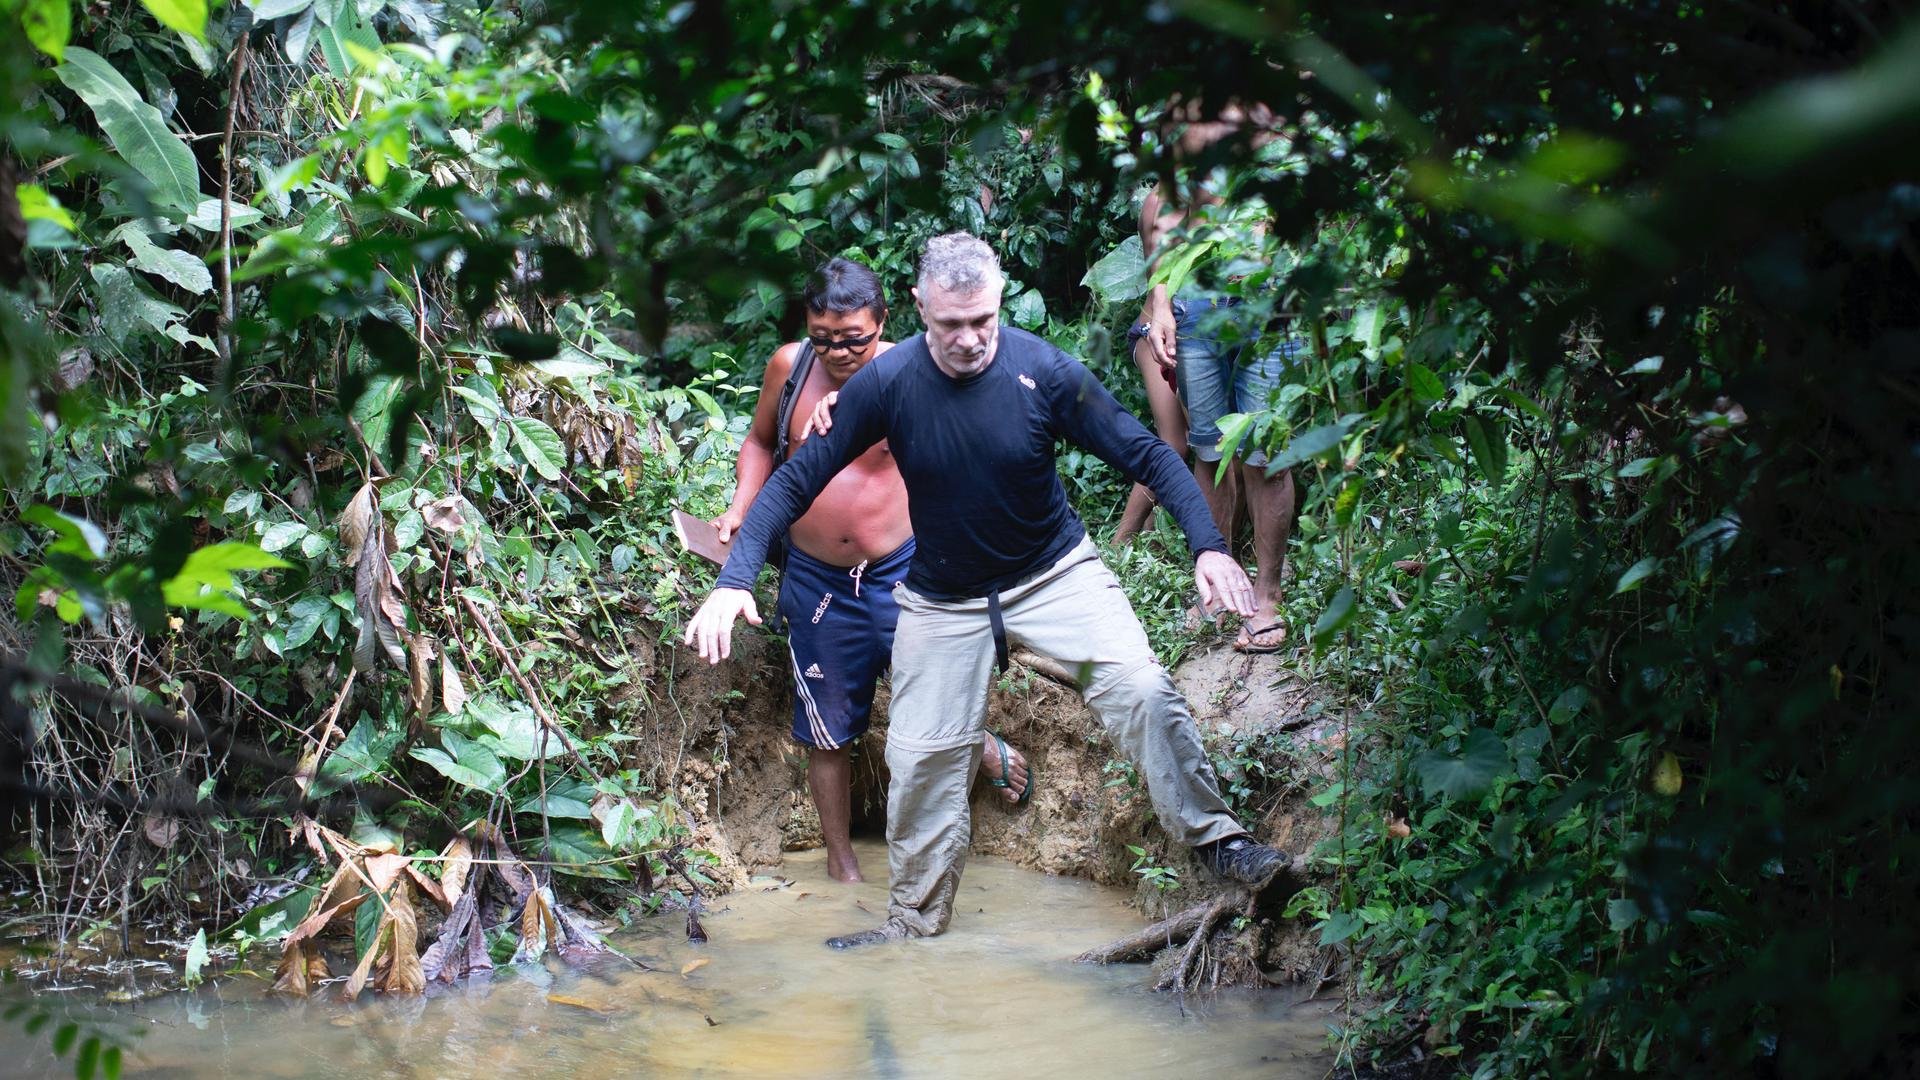 people walking through mud in a village in Brazil